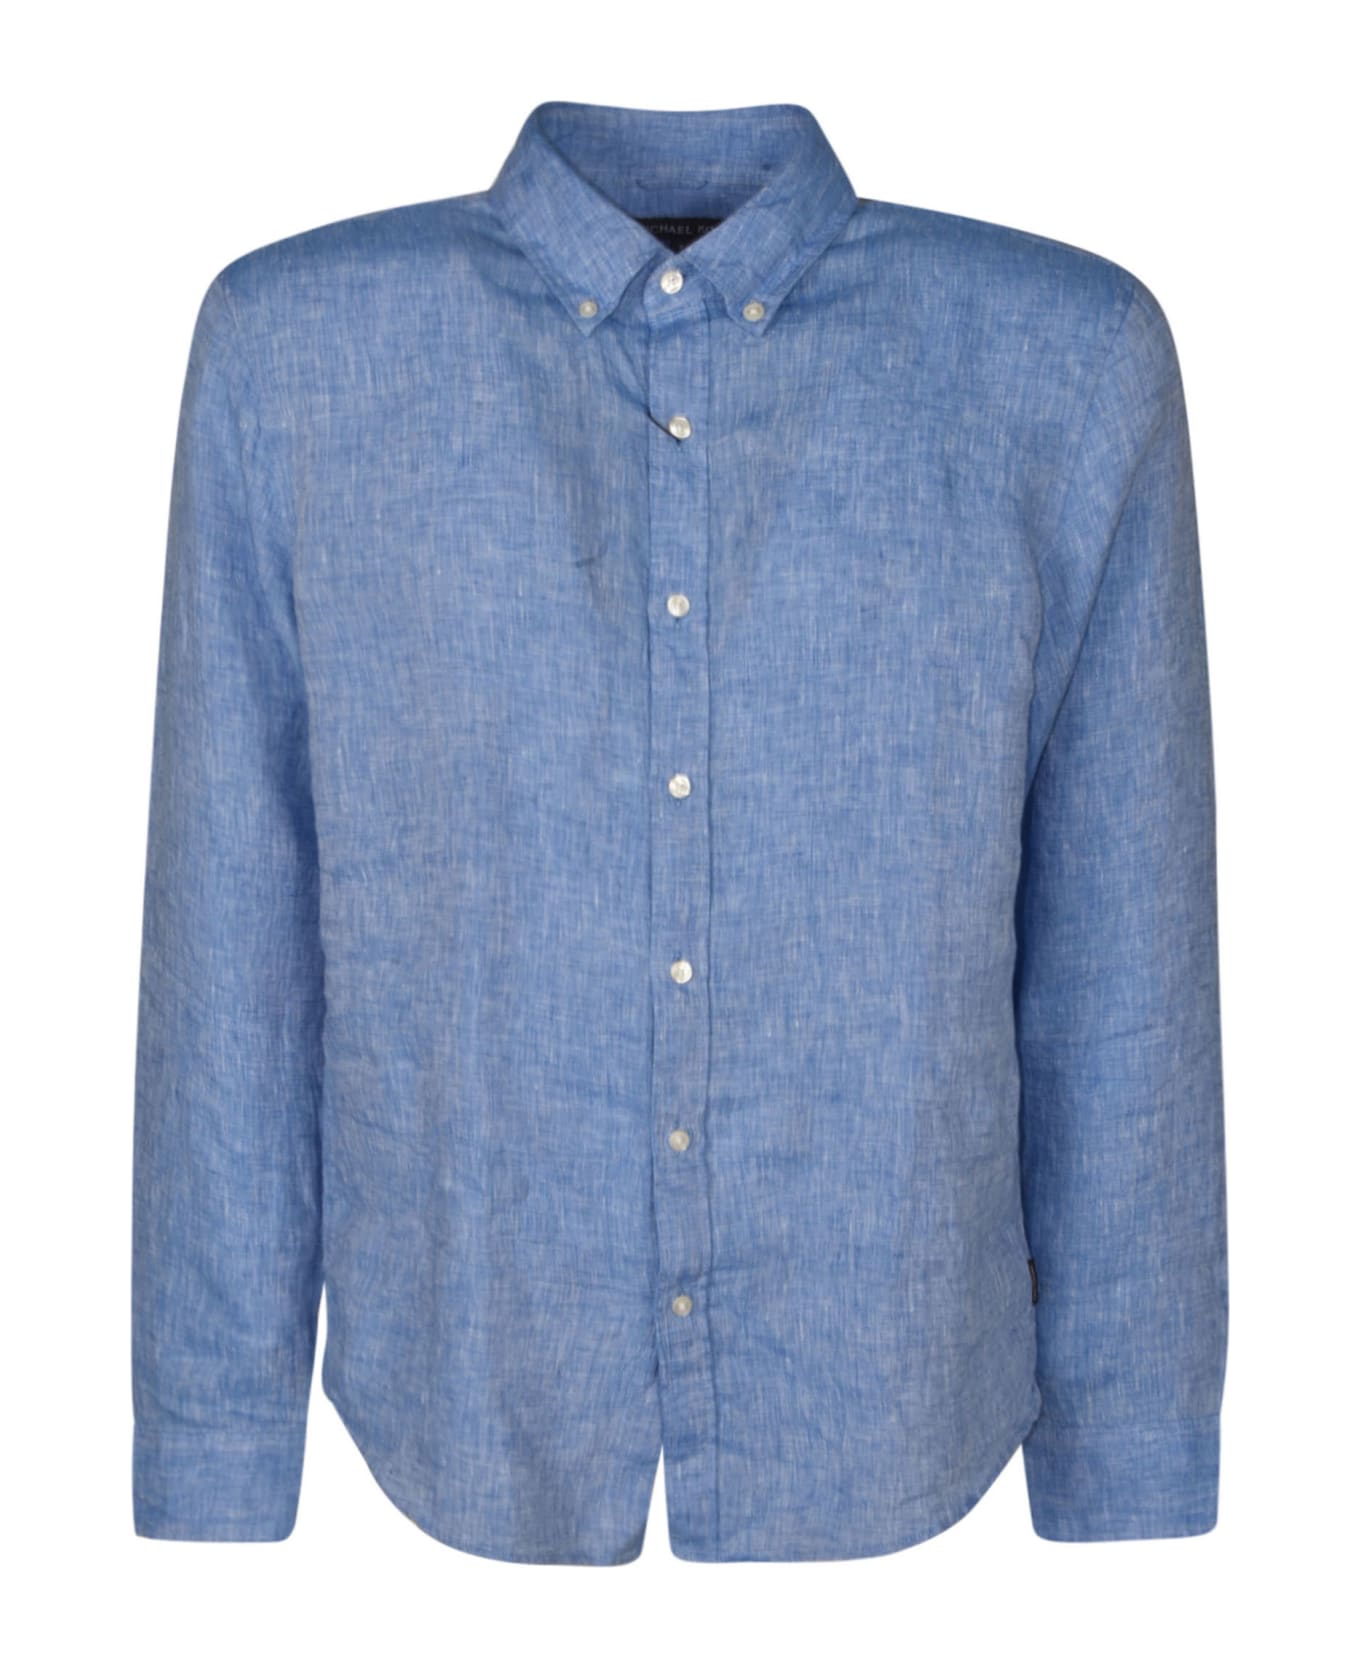 Michael Kors Classic Plain Shirt - Grecian Blue